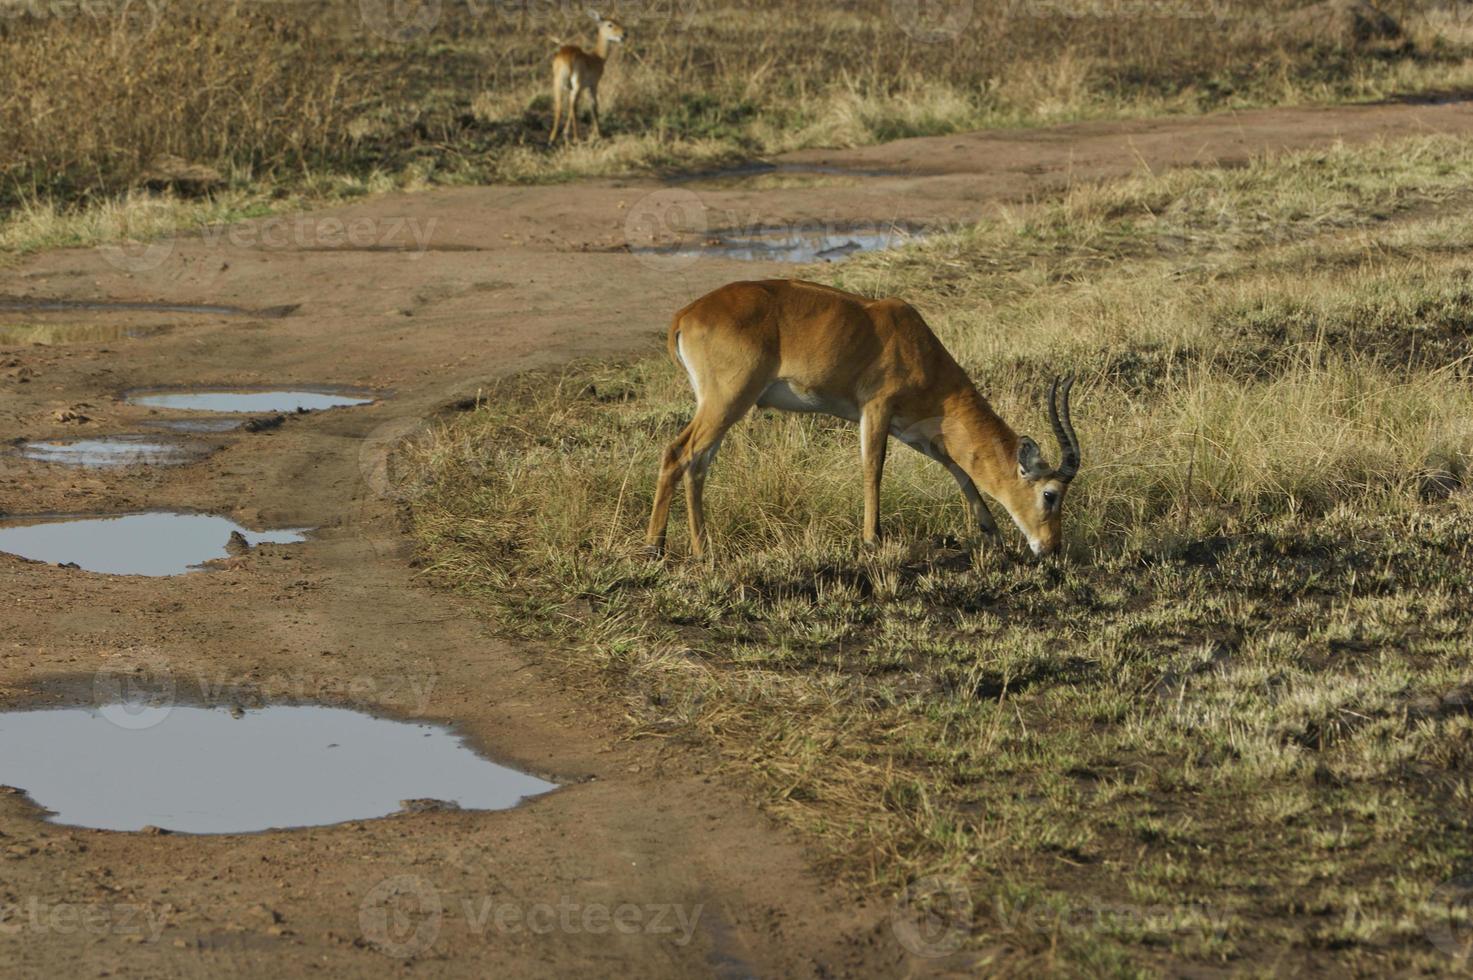 uganda kob nel parco nazionale della regina elisabetta, uganda africa foto